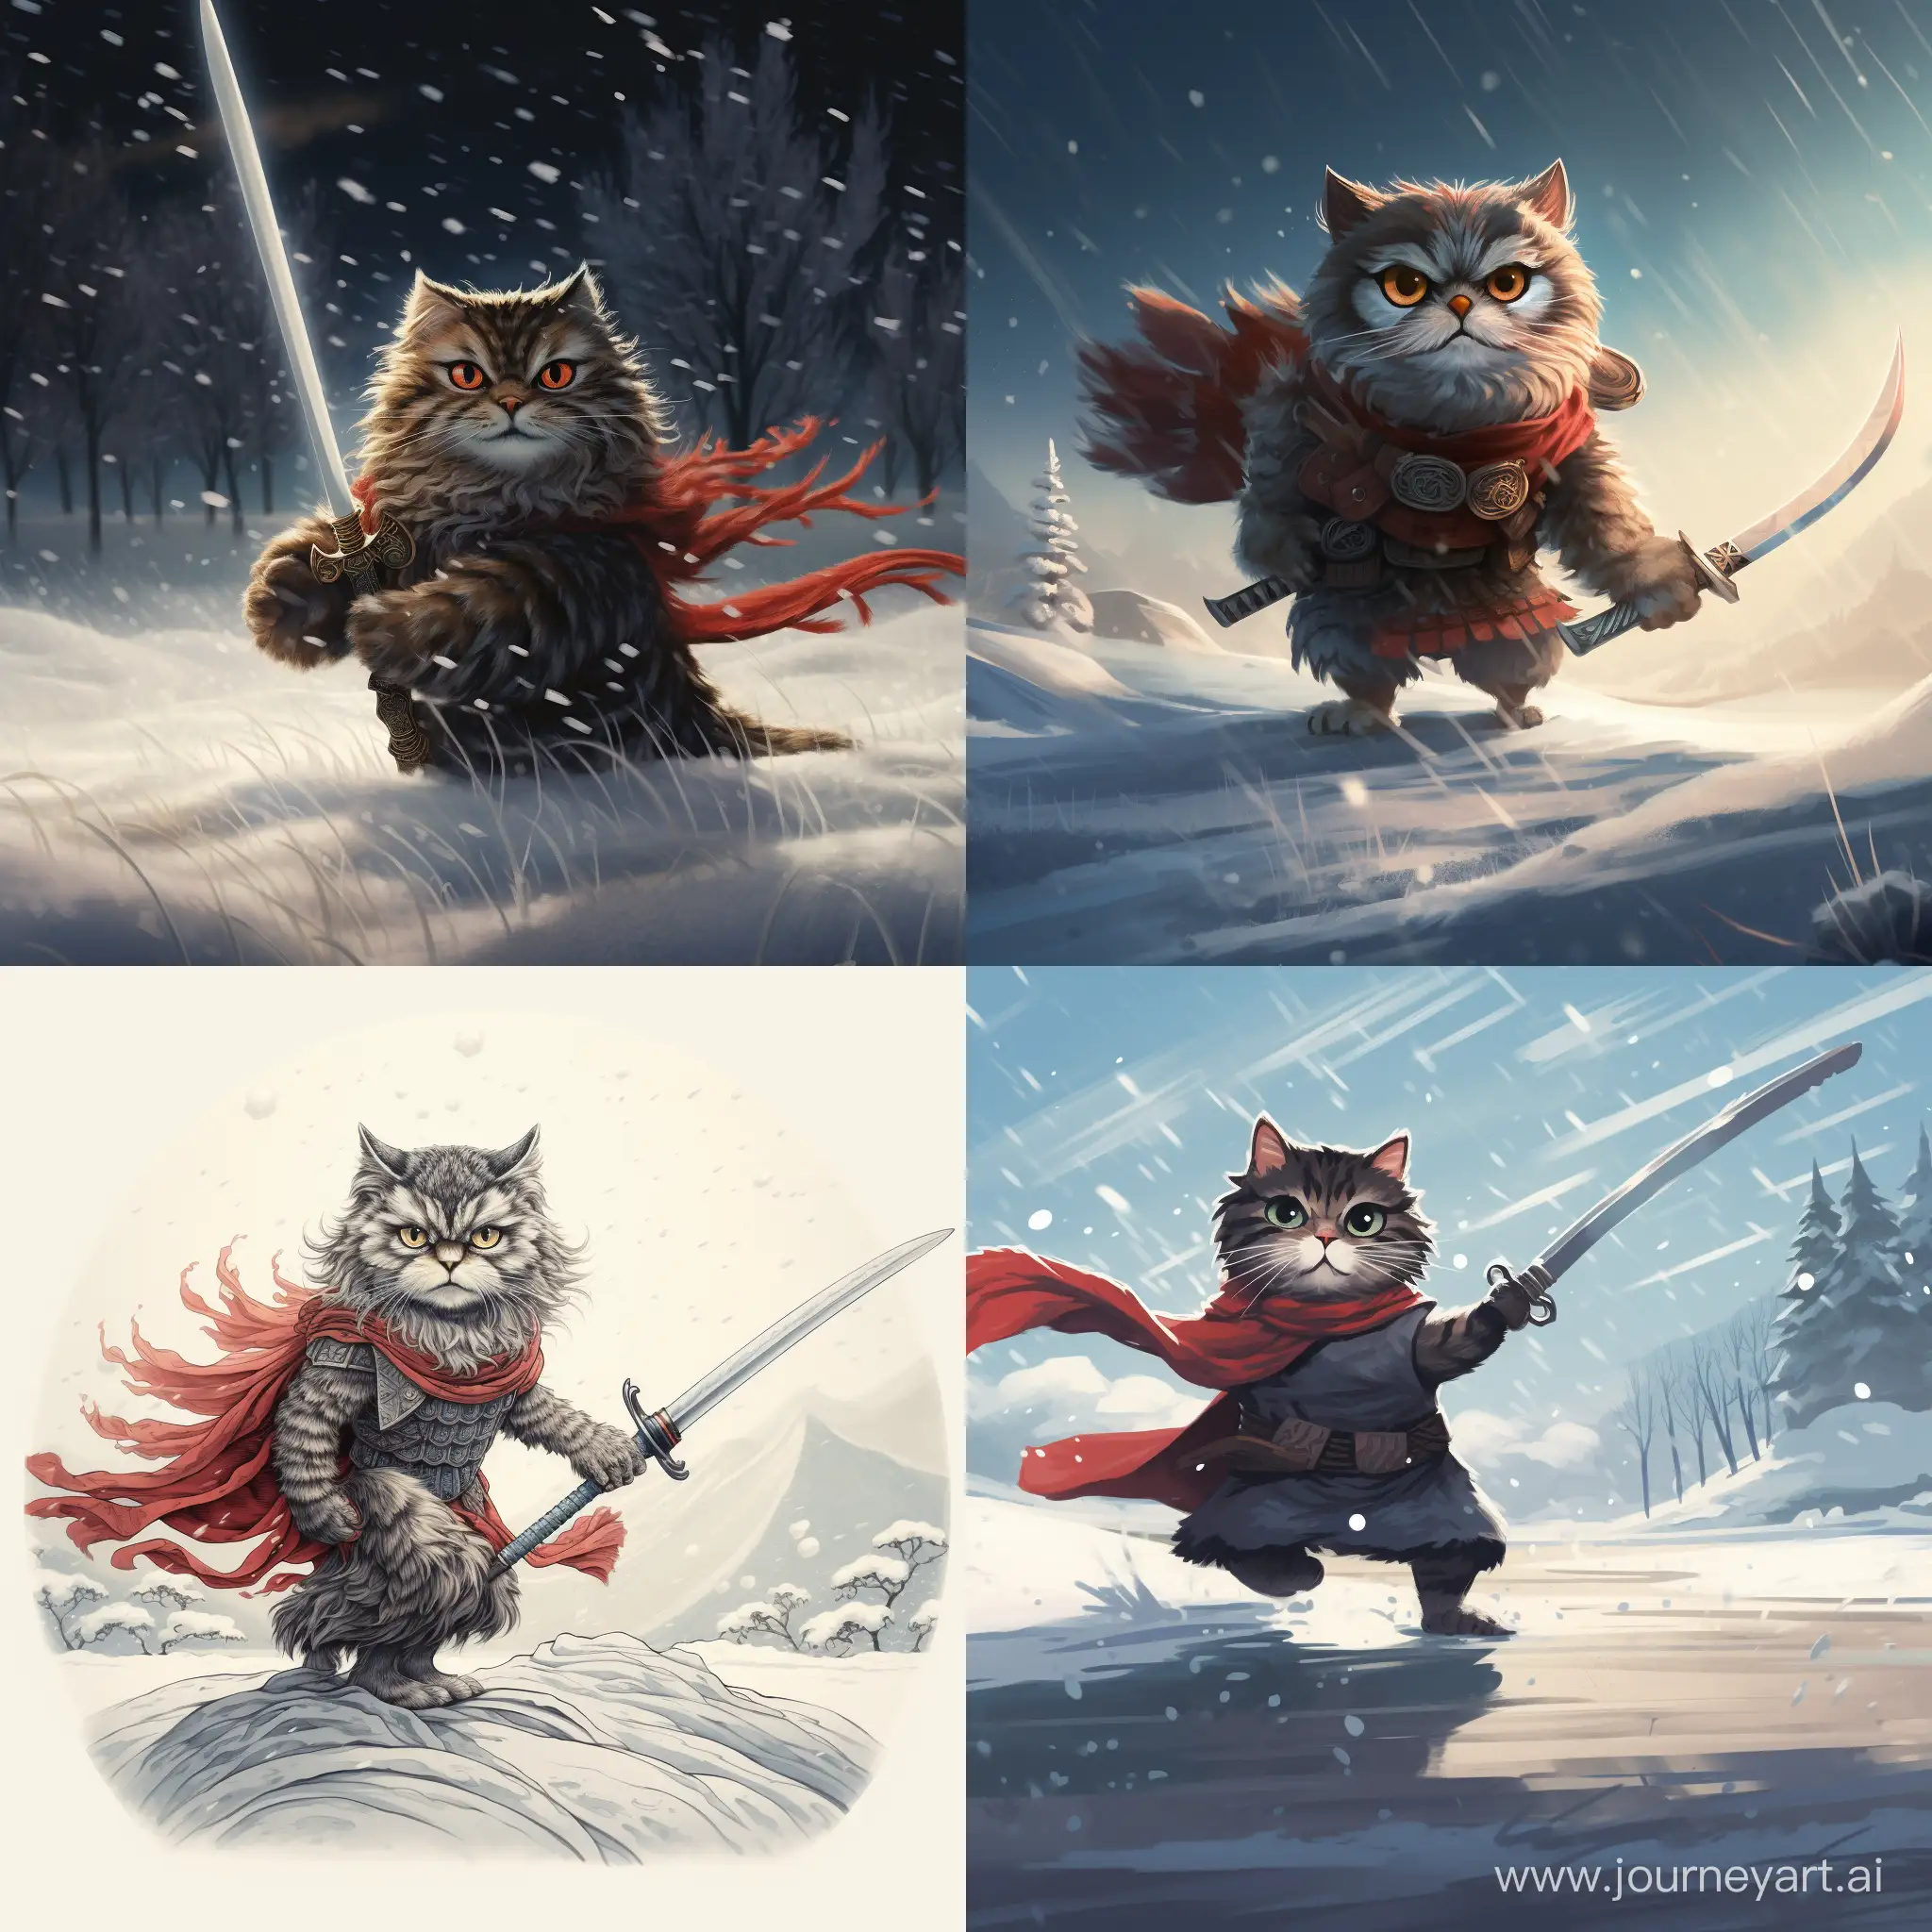 Fierce-Cat-Dueling-an-Owl-with-a-Katana-in-Snowy-Showdown